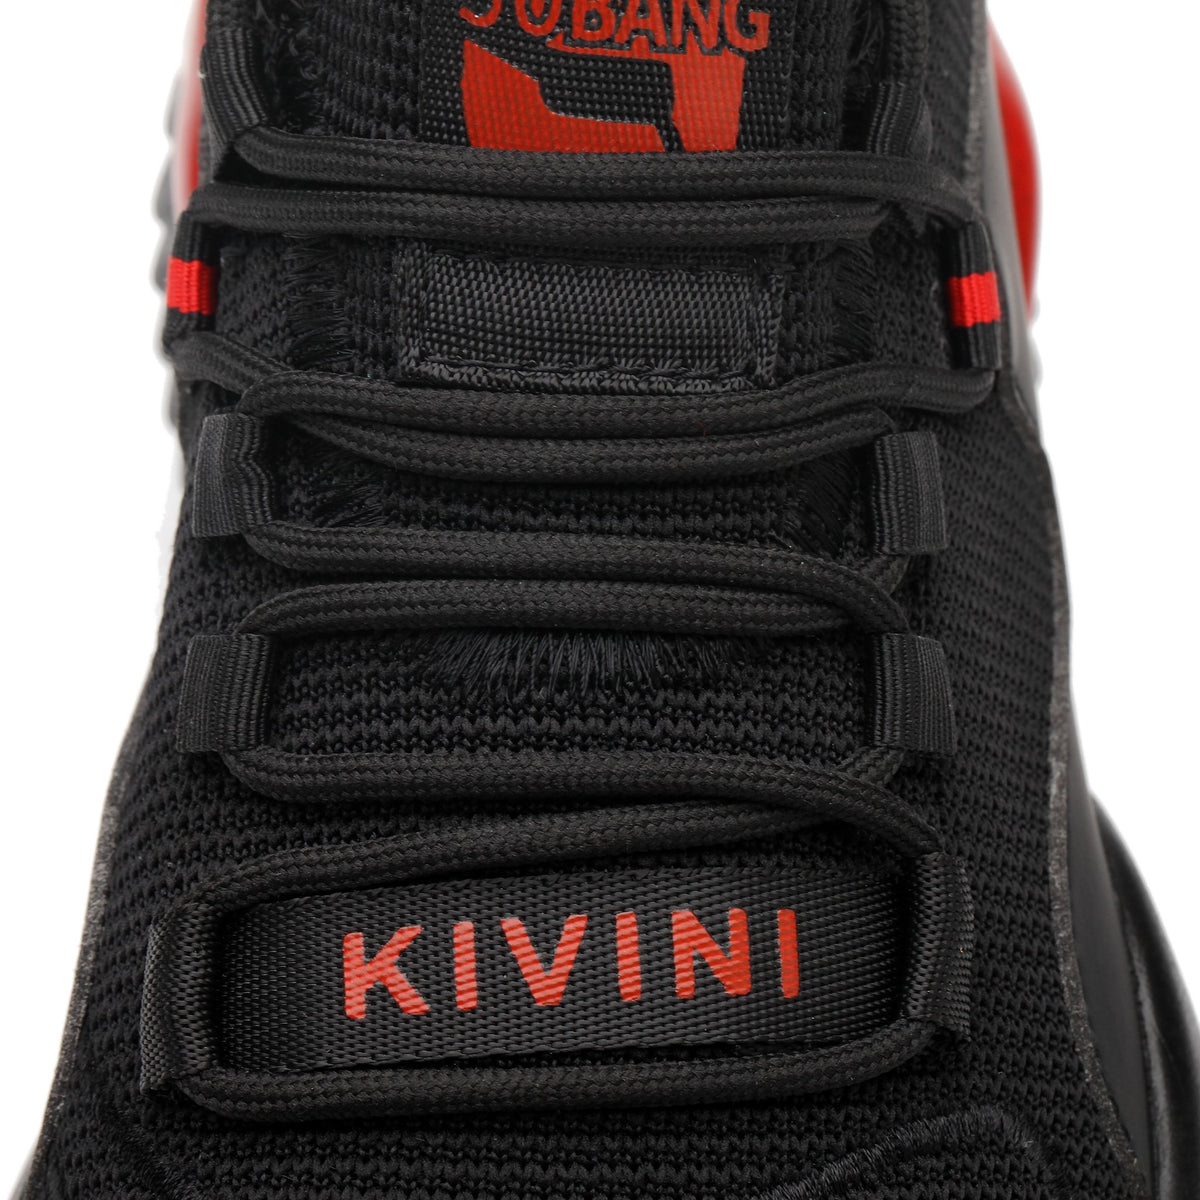 Kivini Indestructible Shoes - Indestructible Shoes